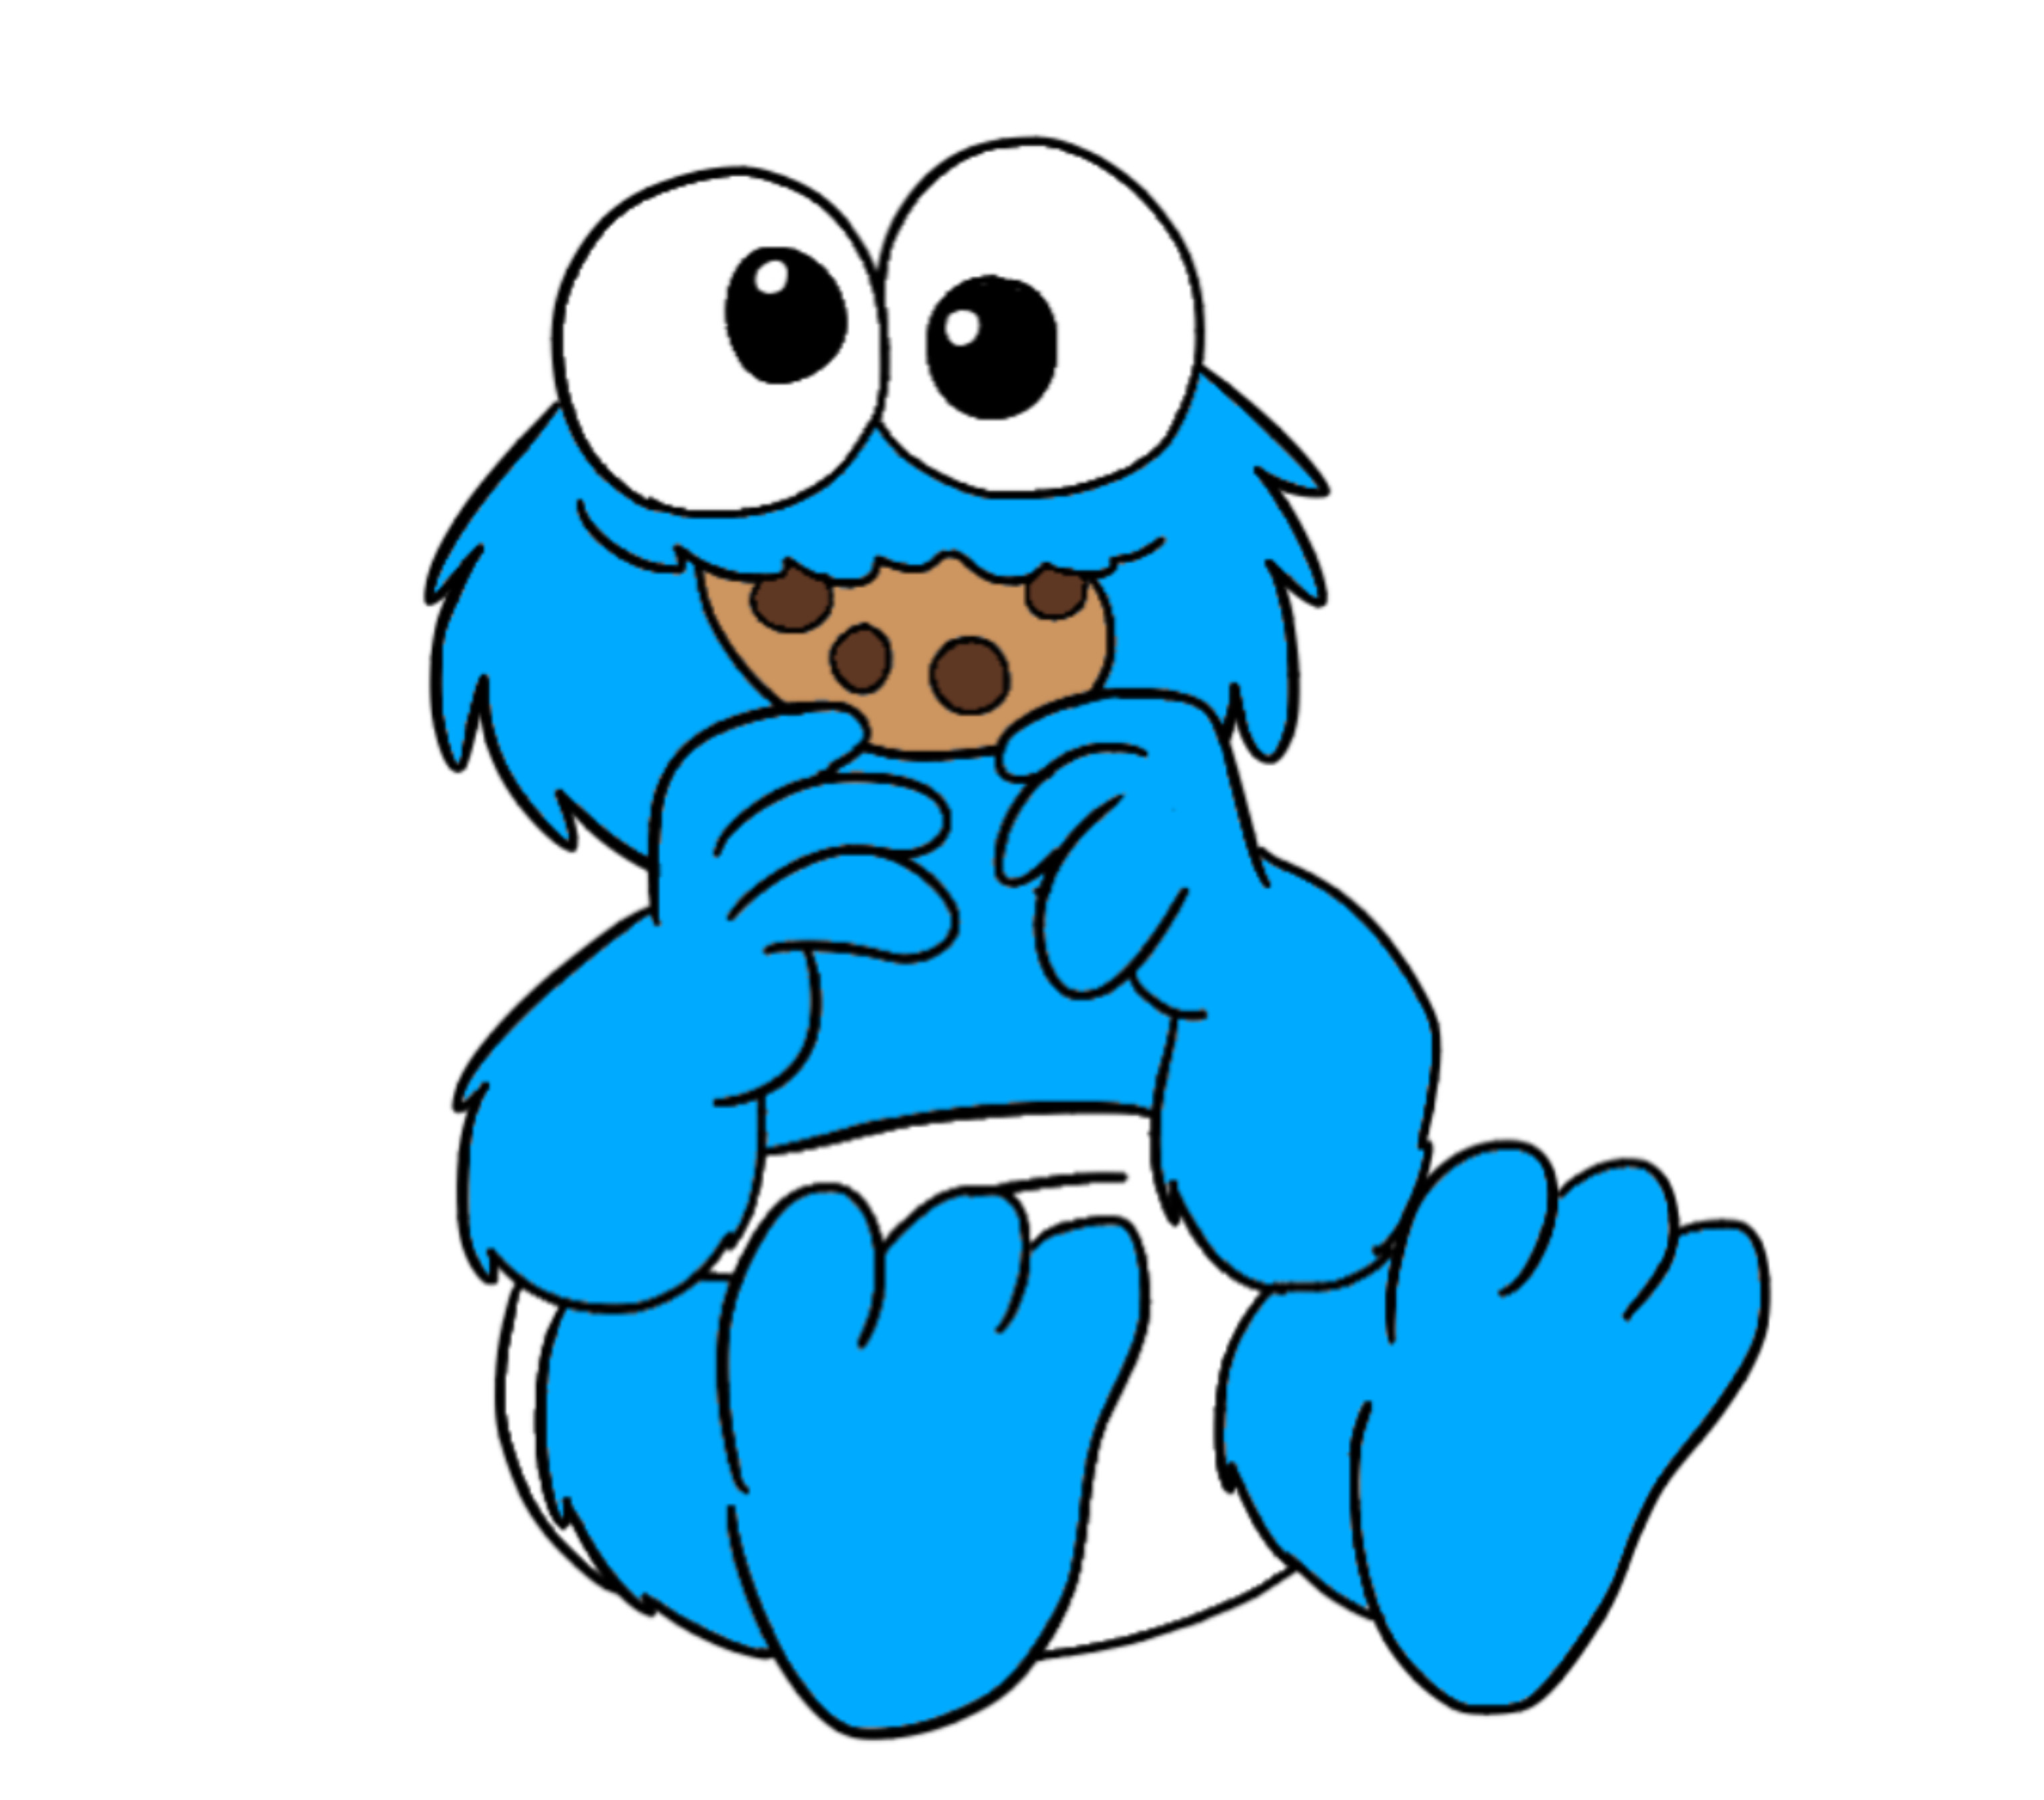 Baby Cookie Monster by mcdnalds2016 on DeviantArt